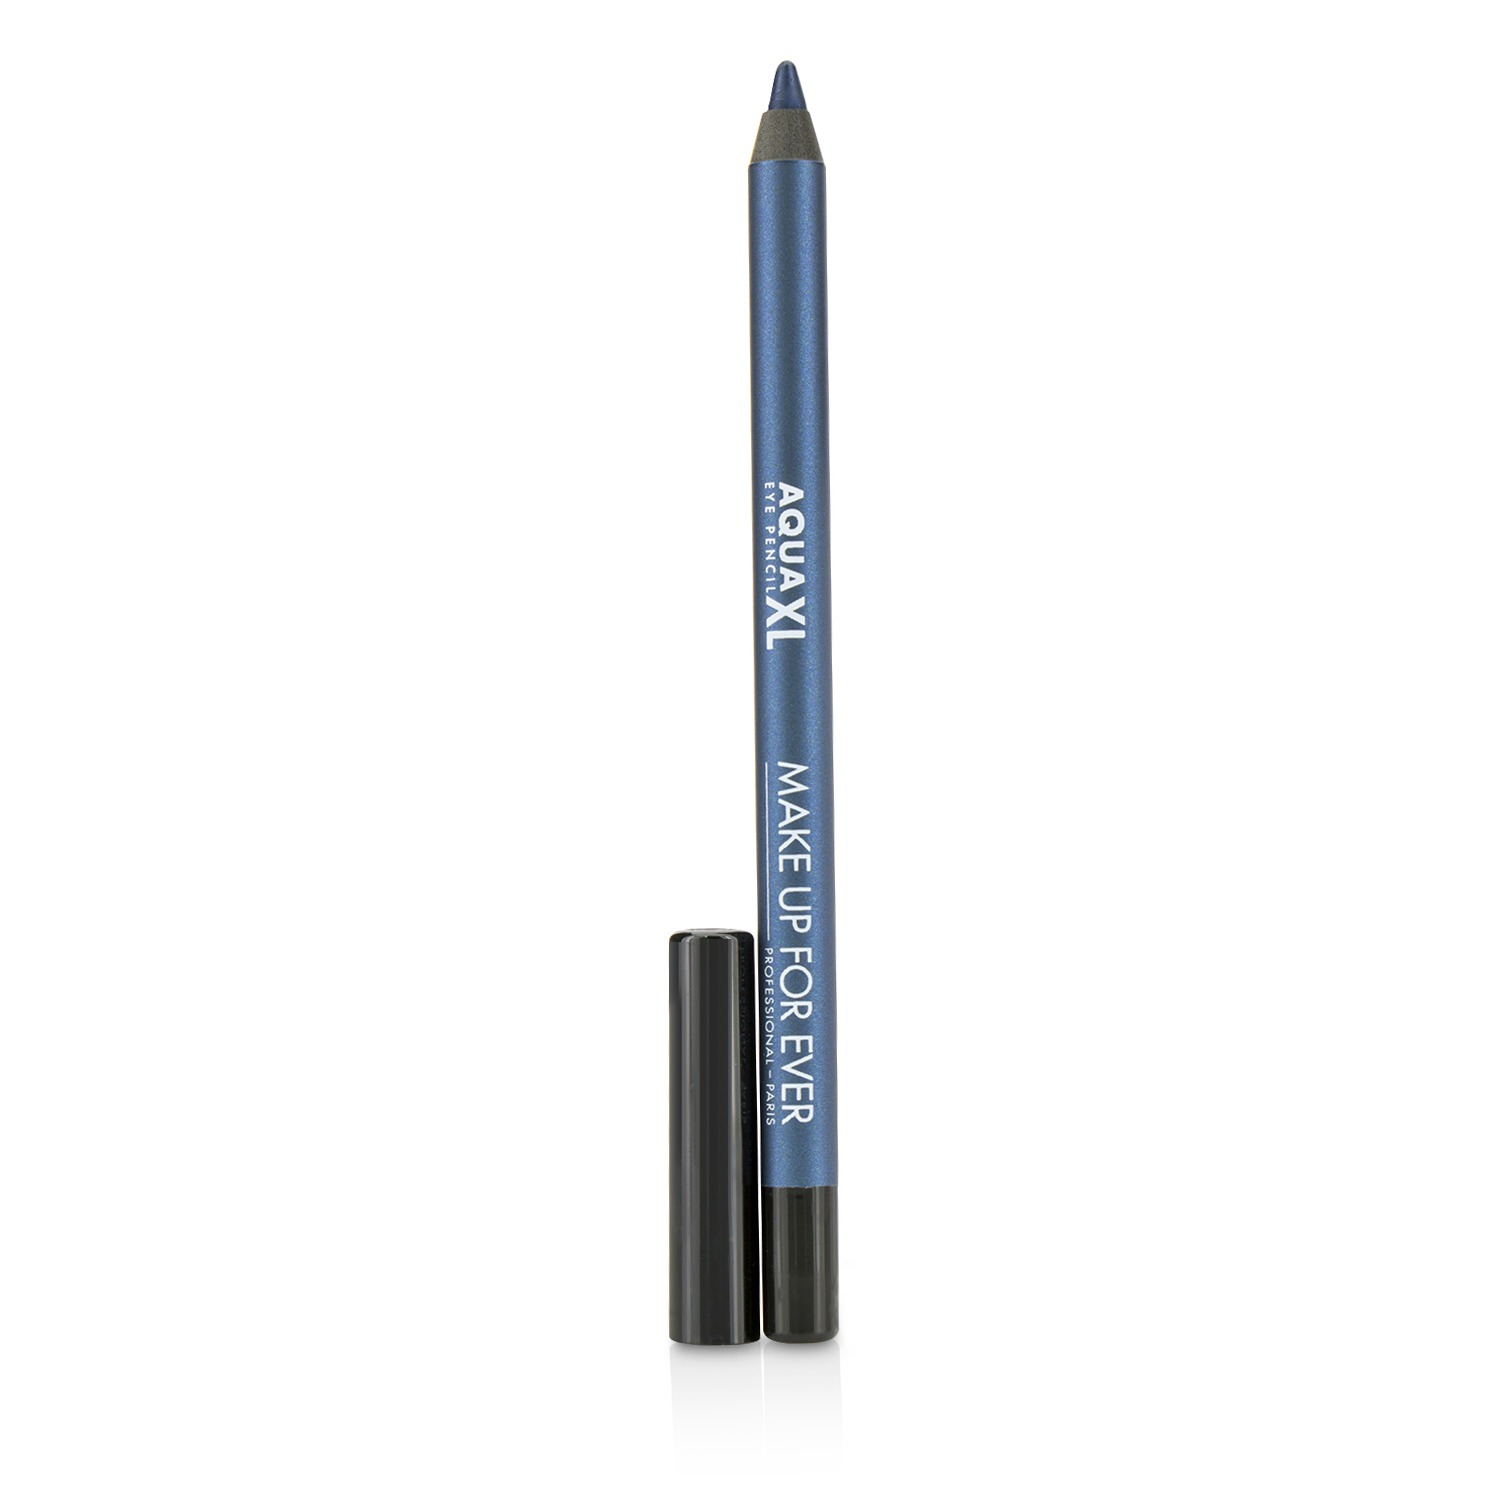 Aqua XL Extra Long Lasting Waterproof Eye Pencil - # S-20 (Satiny Navy Blue) Make Up For Ever Image